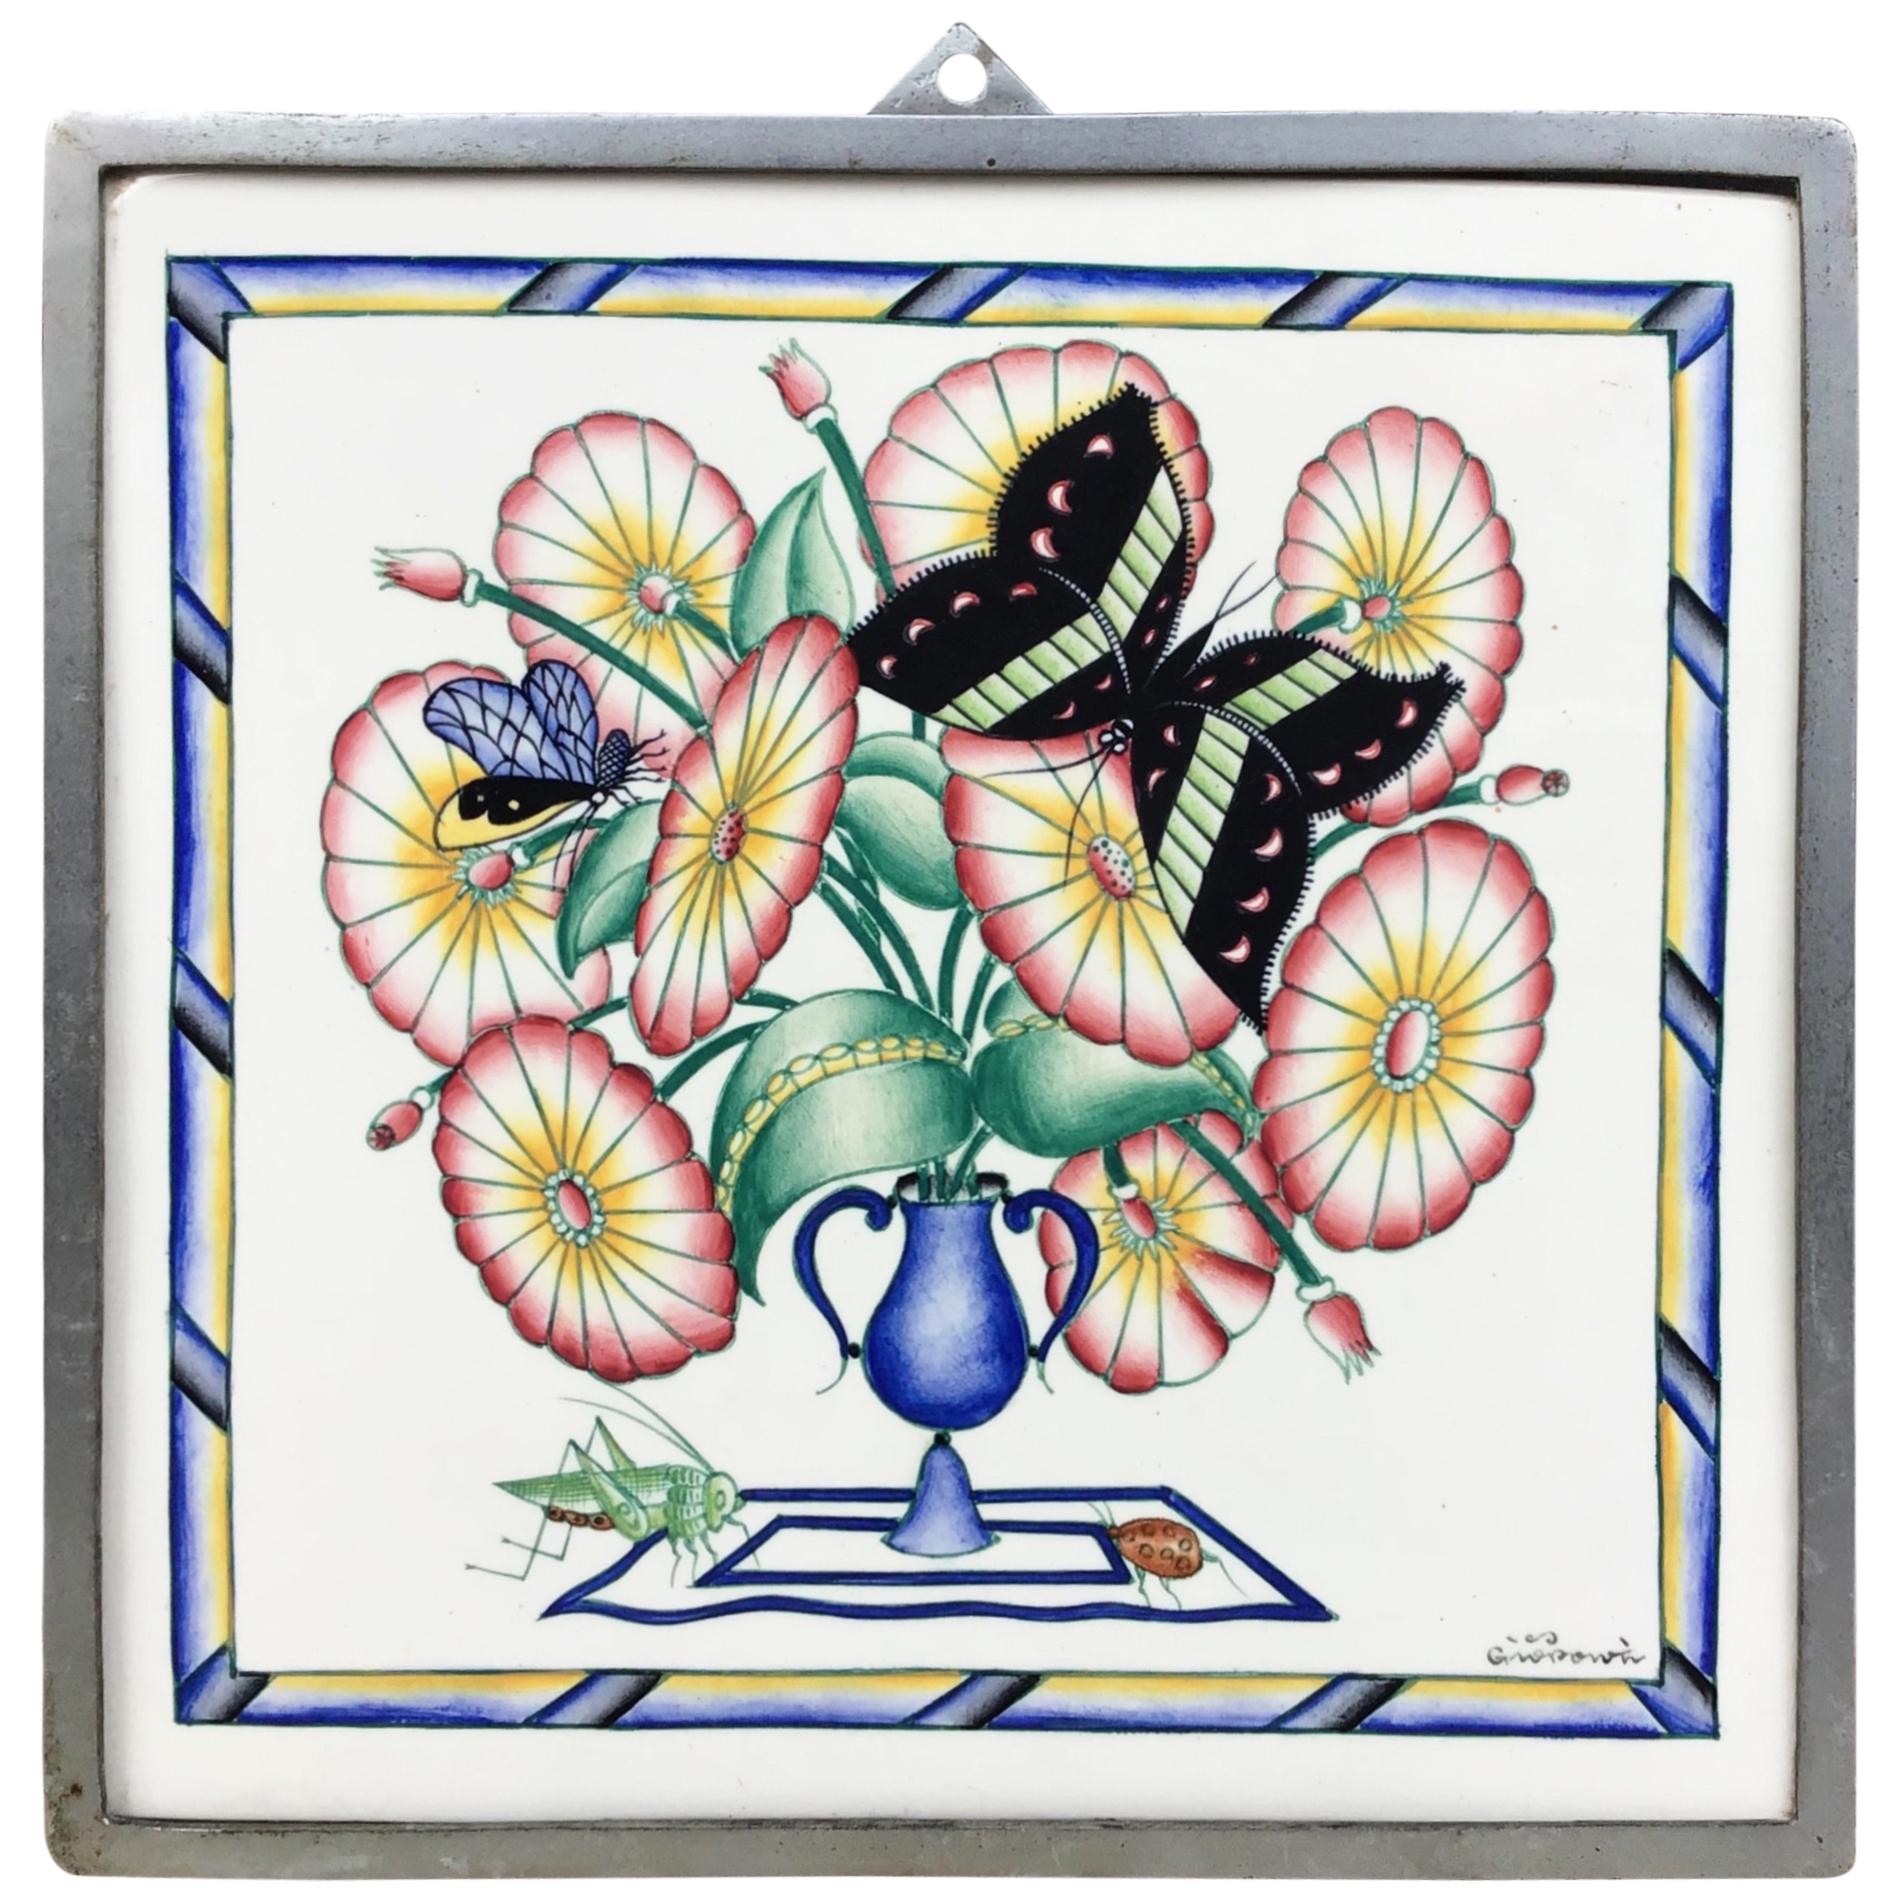 Gio Ponti Richard Ginori San Cristoforo Ceramic Tile 1930 Signed